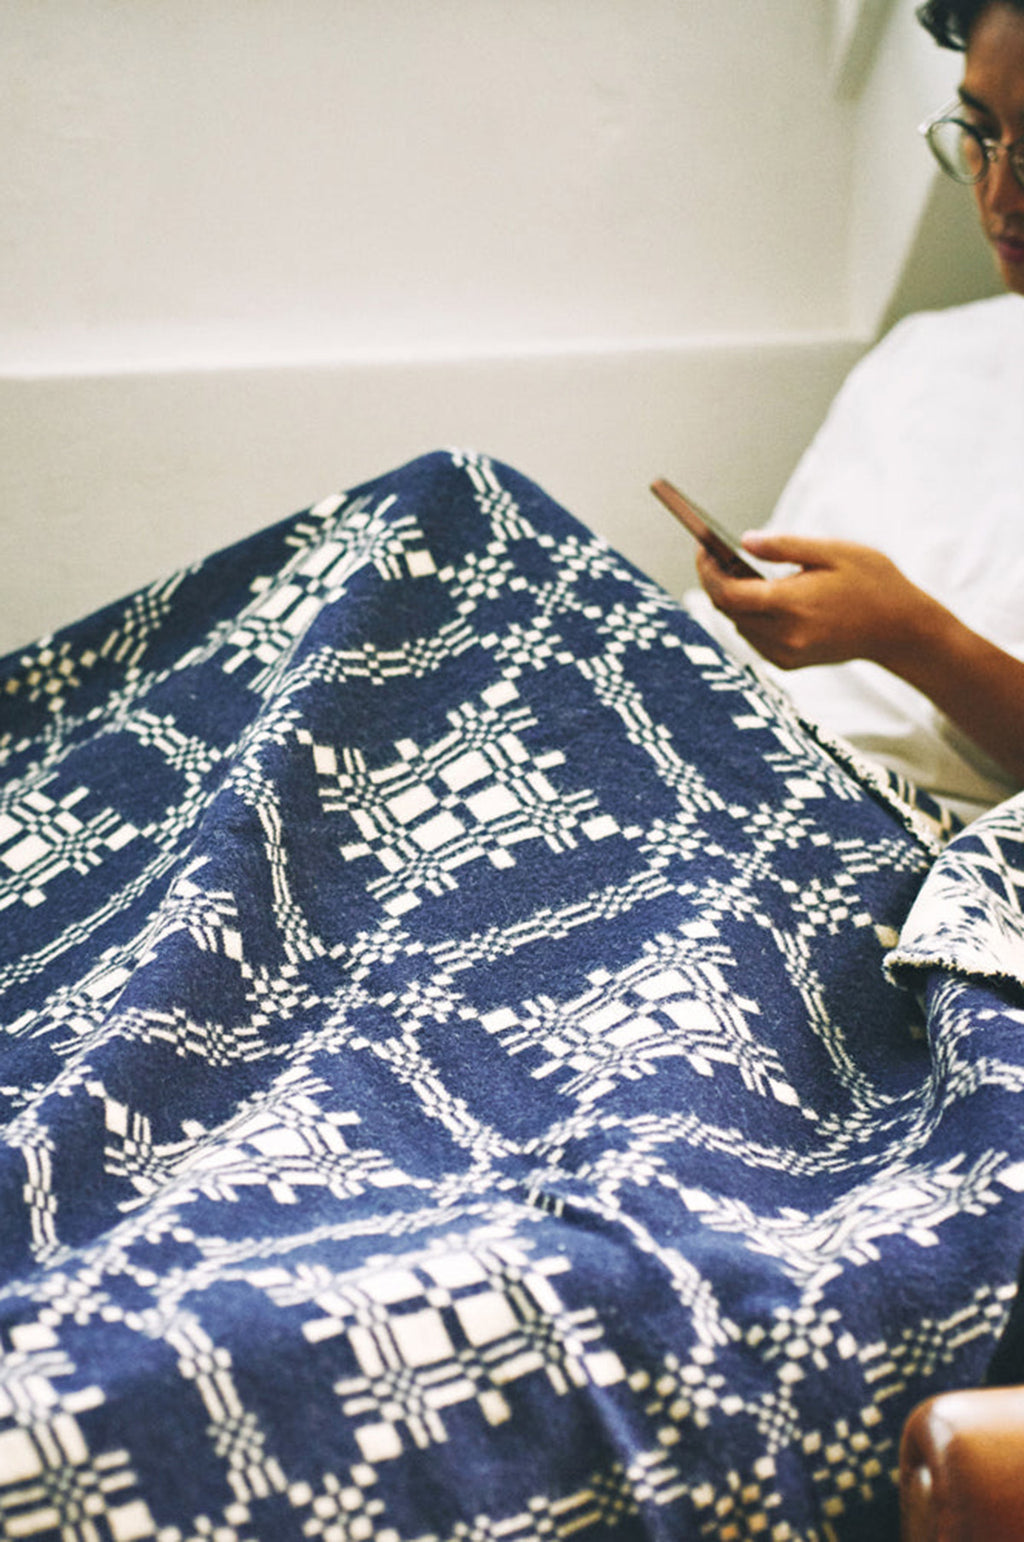 BasShu Wool Blanket in Jacquard Navy and Cream – The Hambledon